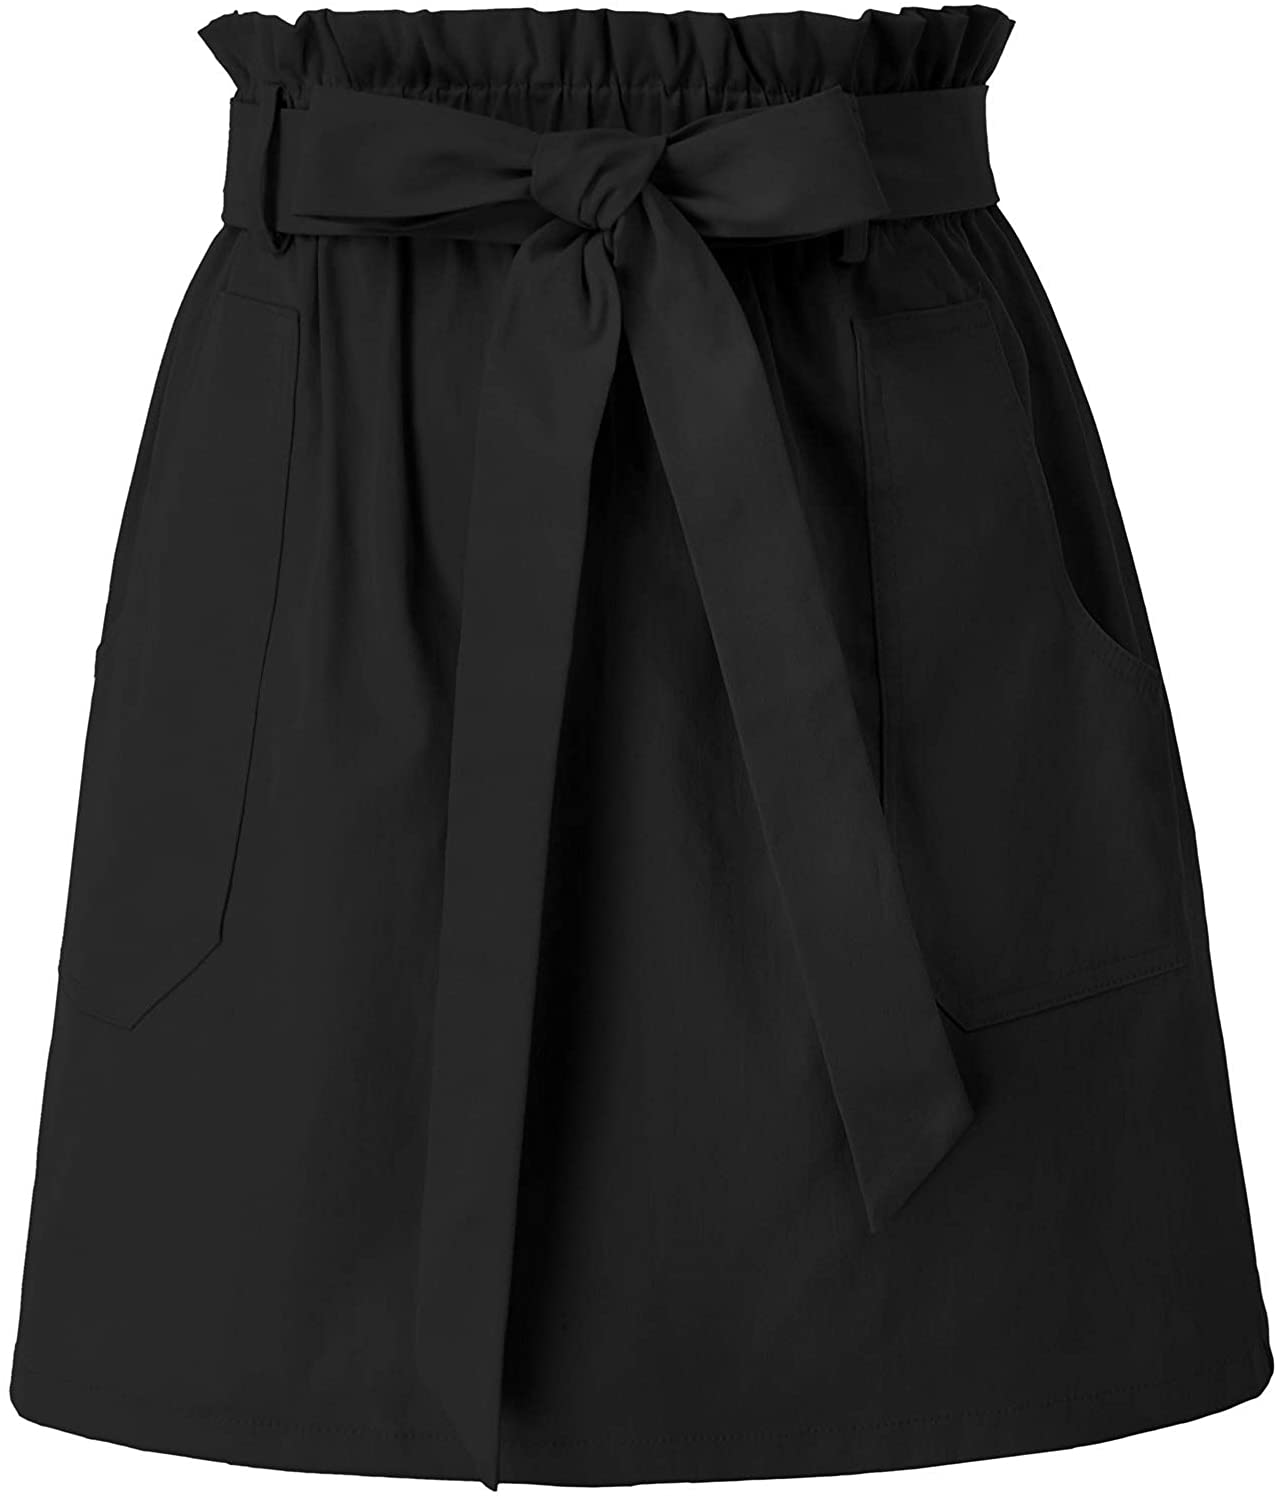 KANCY KOLE Women Casual Cotton Linen Skirts Frill Tie Waist A-Line Midi Skirt with Pockets S-XXL 